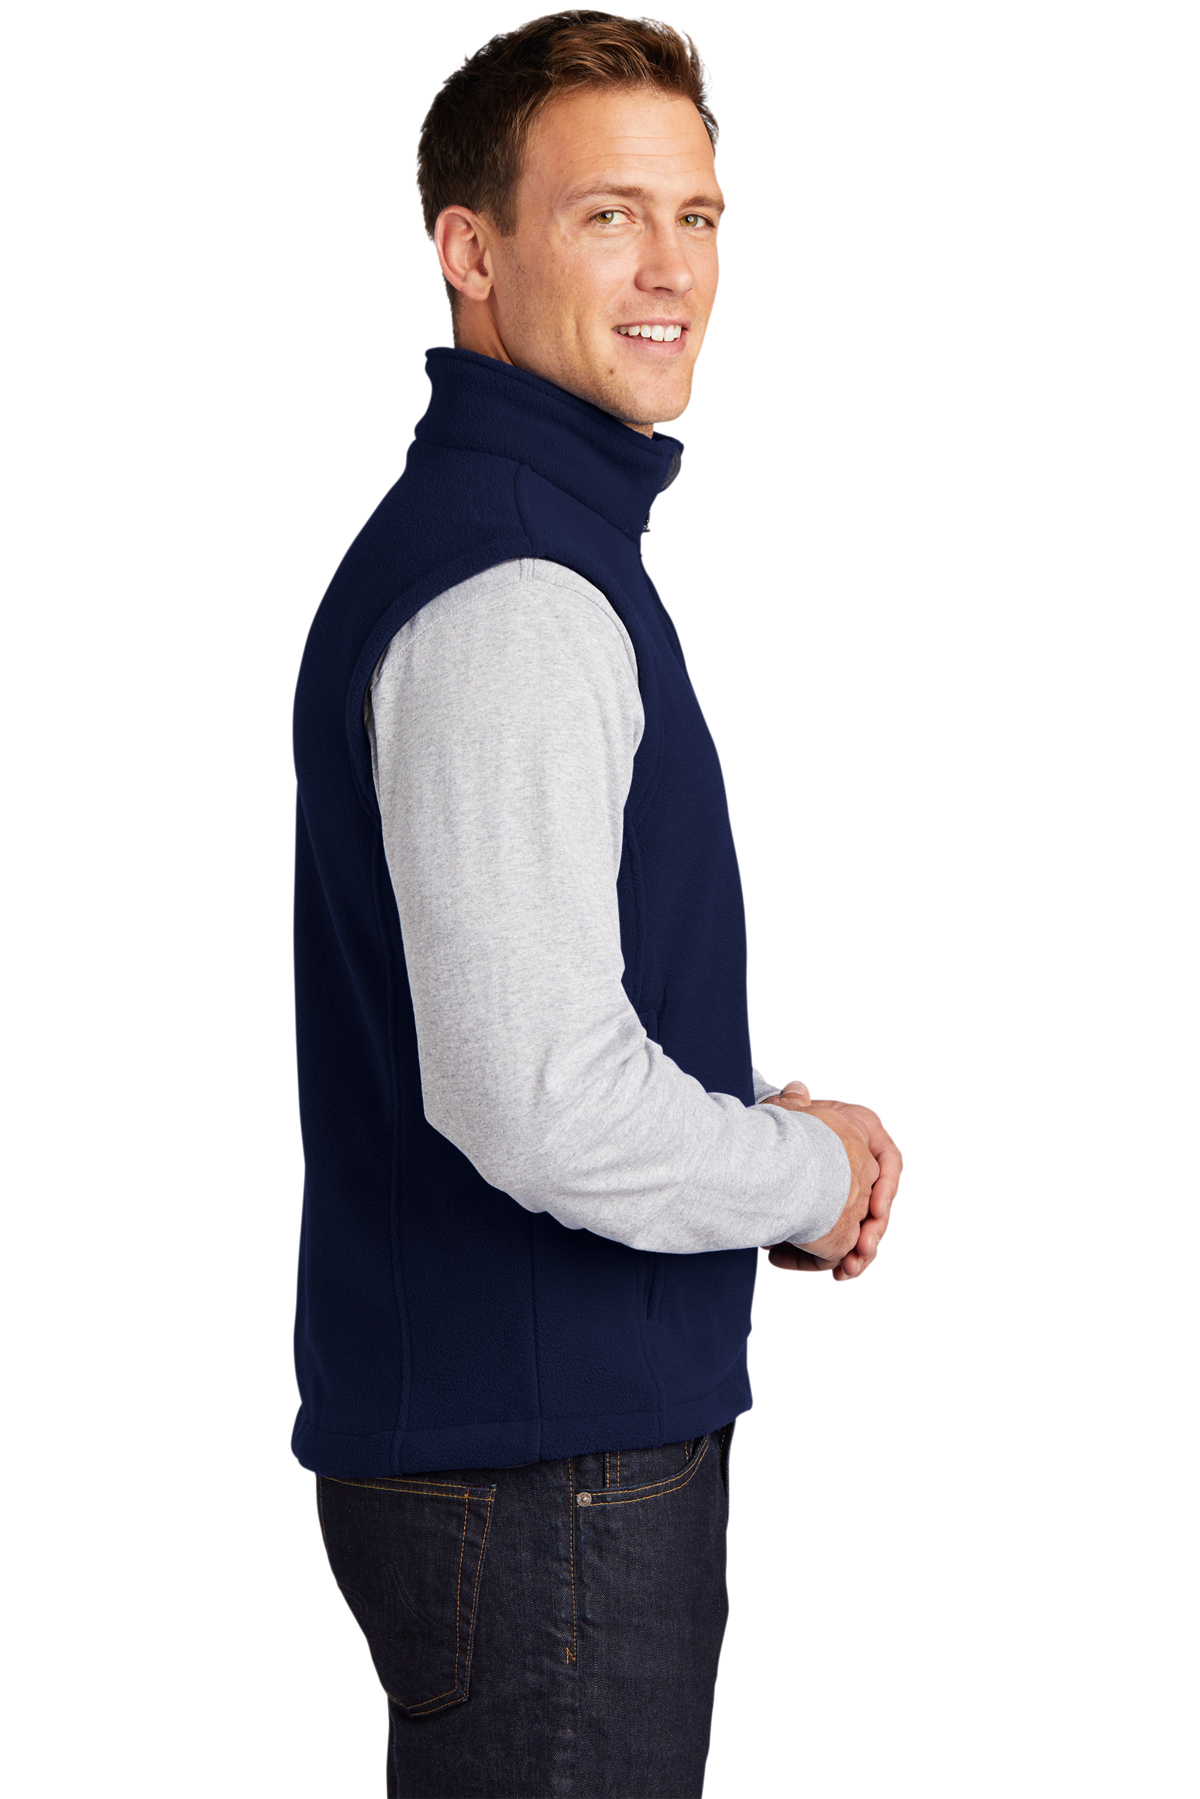 Port Authority ® Value Fleece Vest. F219 